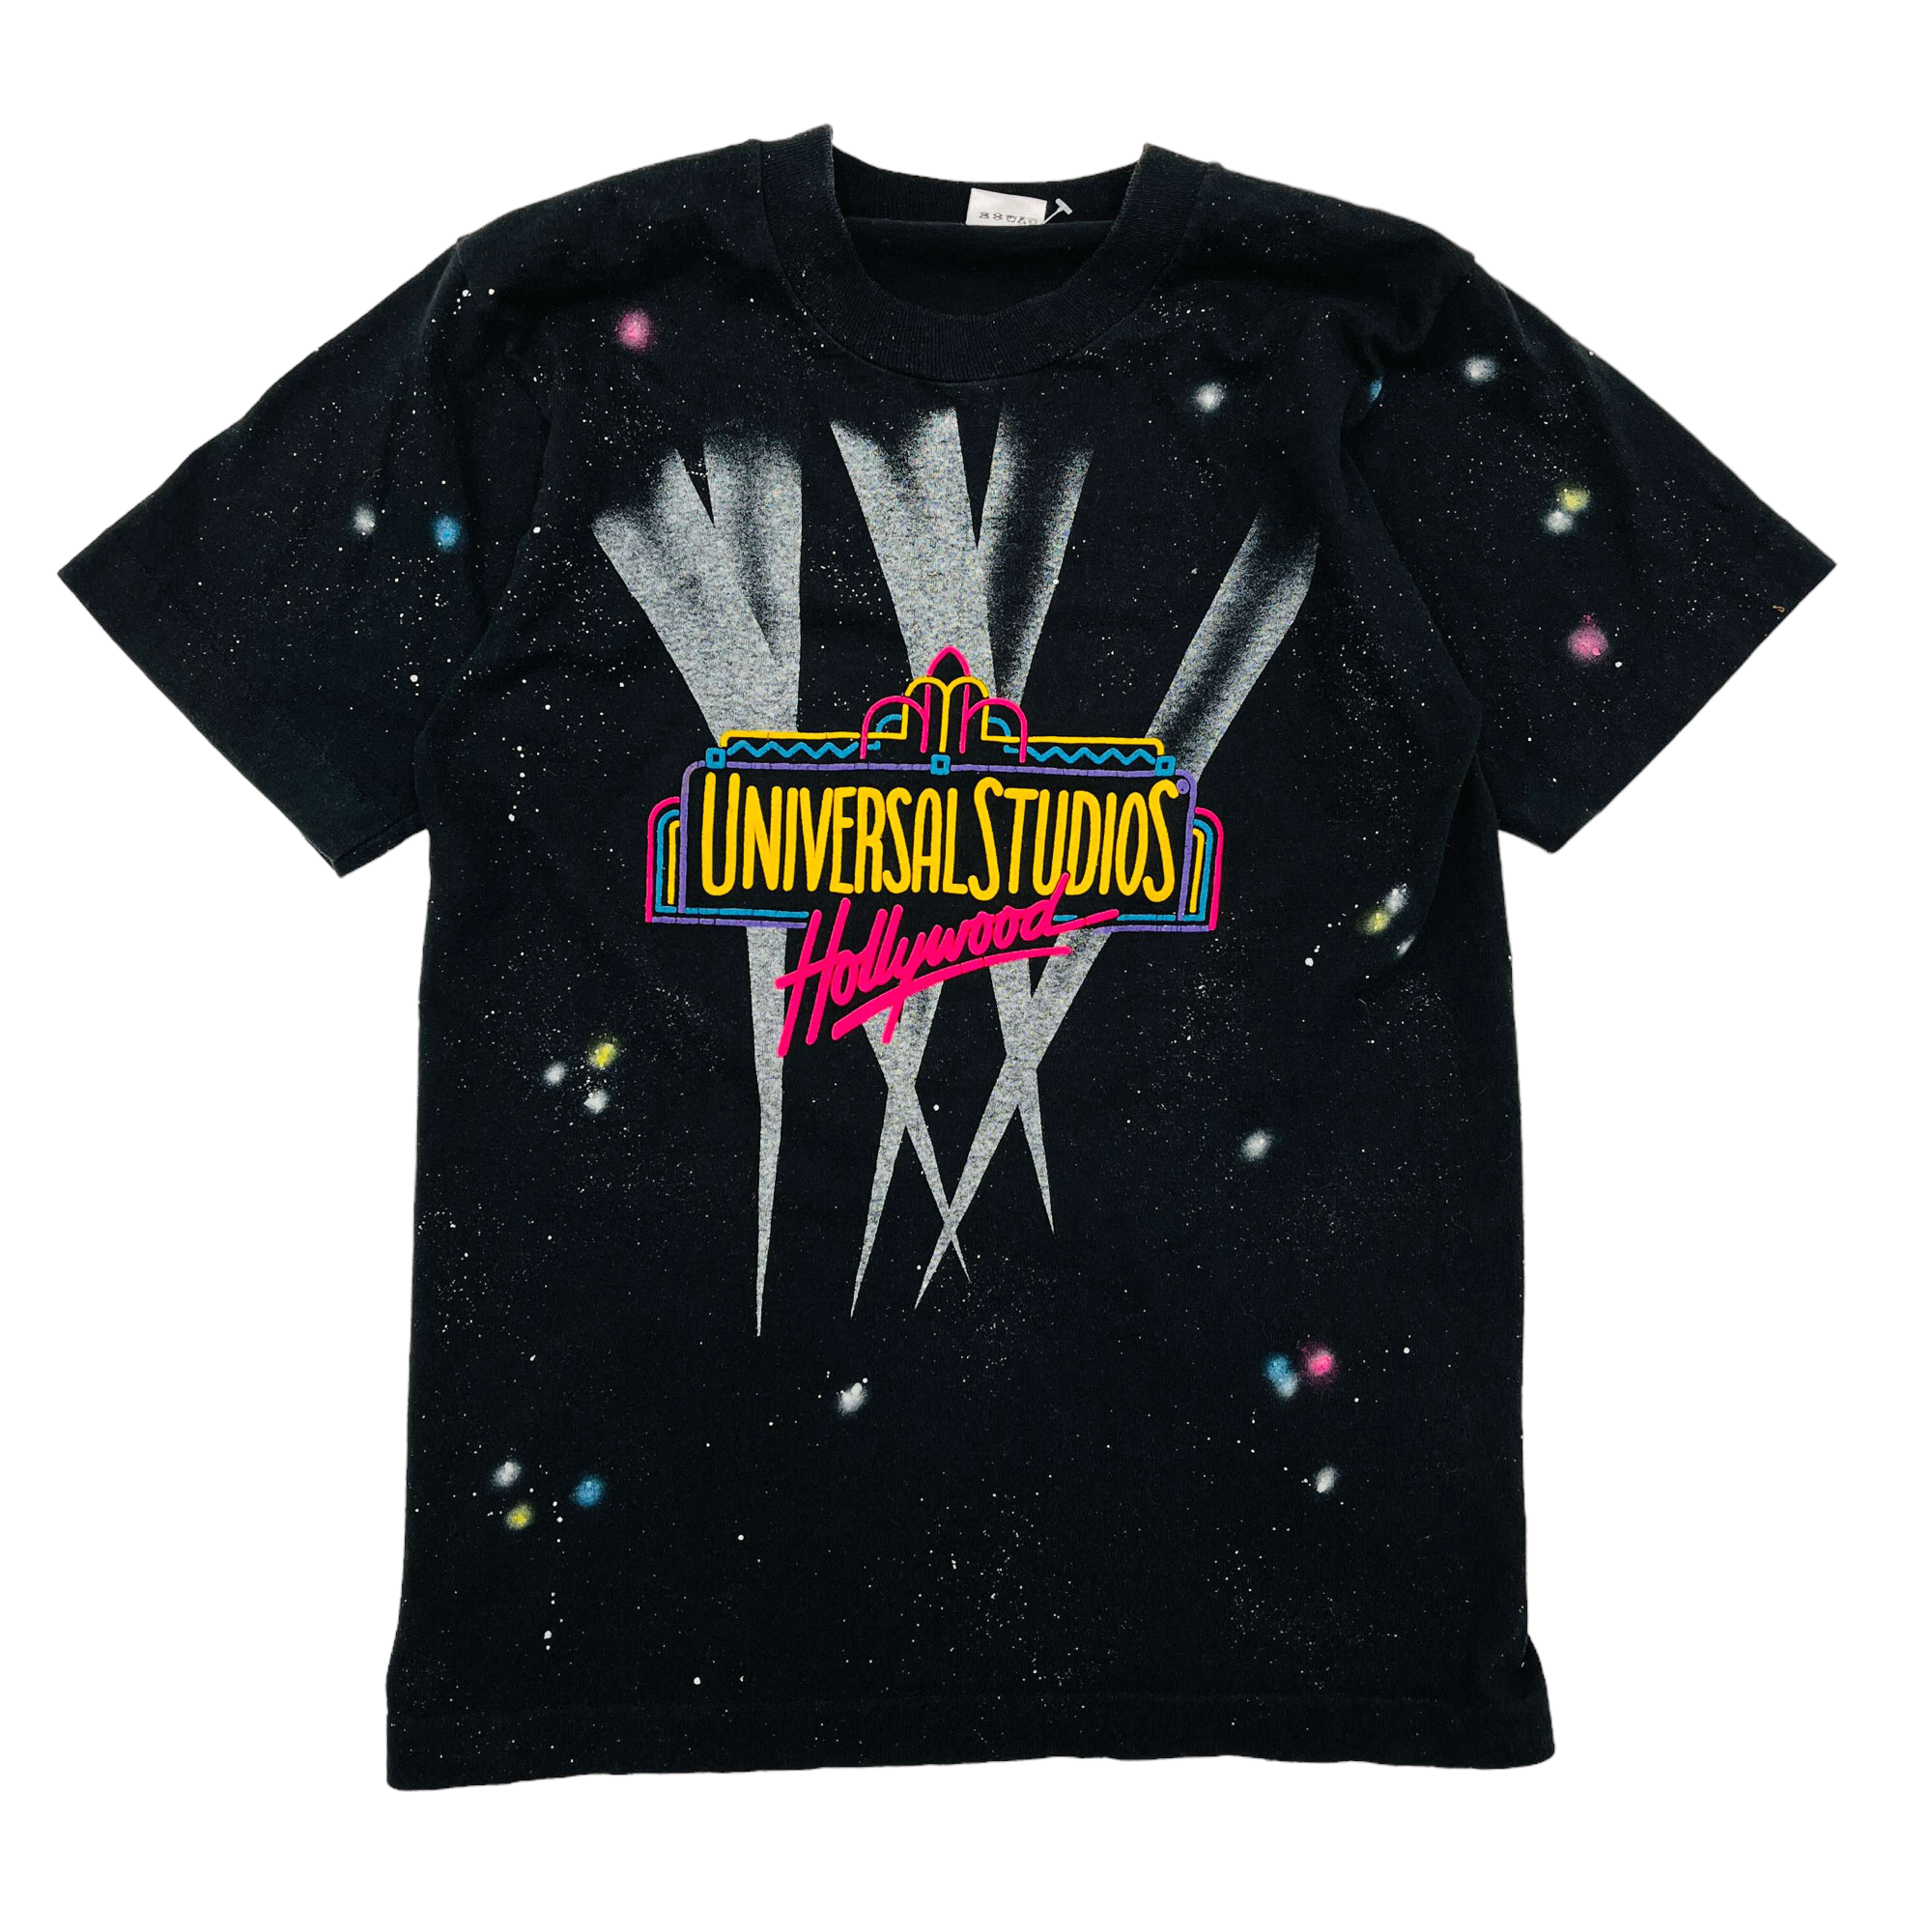 Universal Studios Hollywood T-Shirt - Small